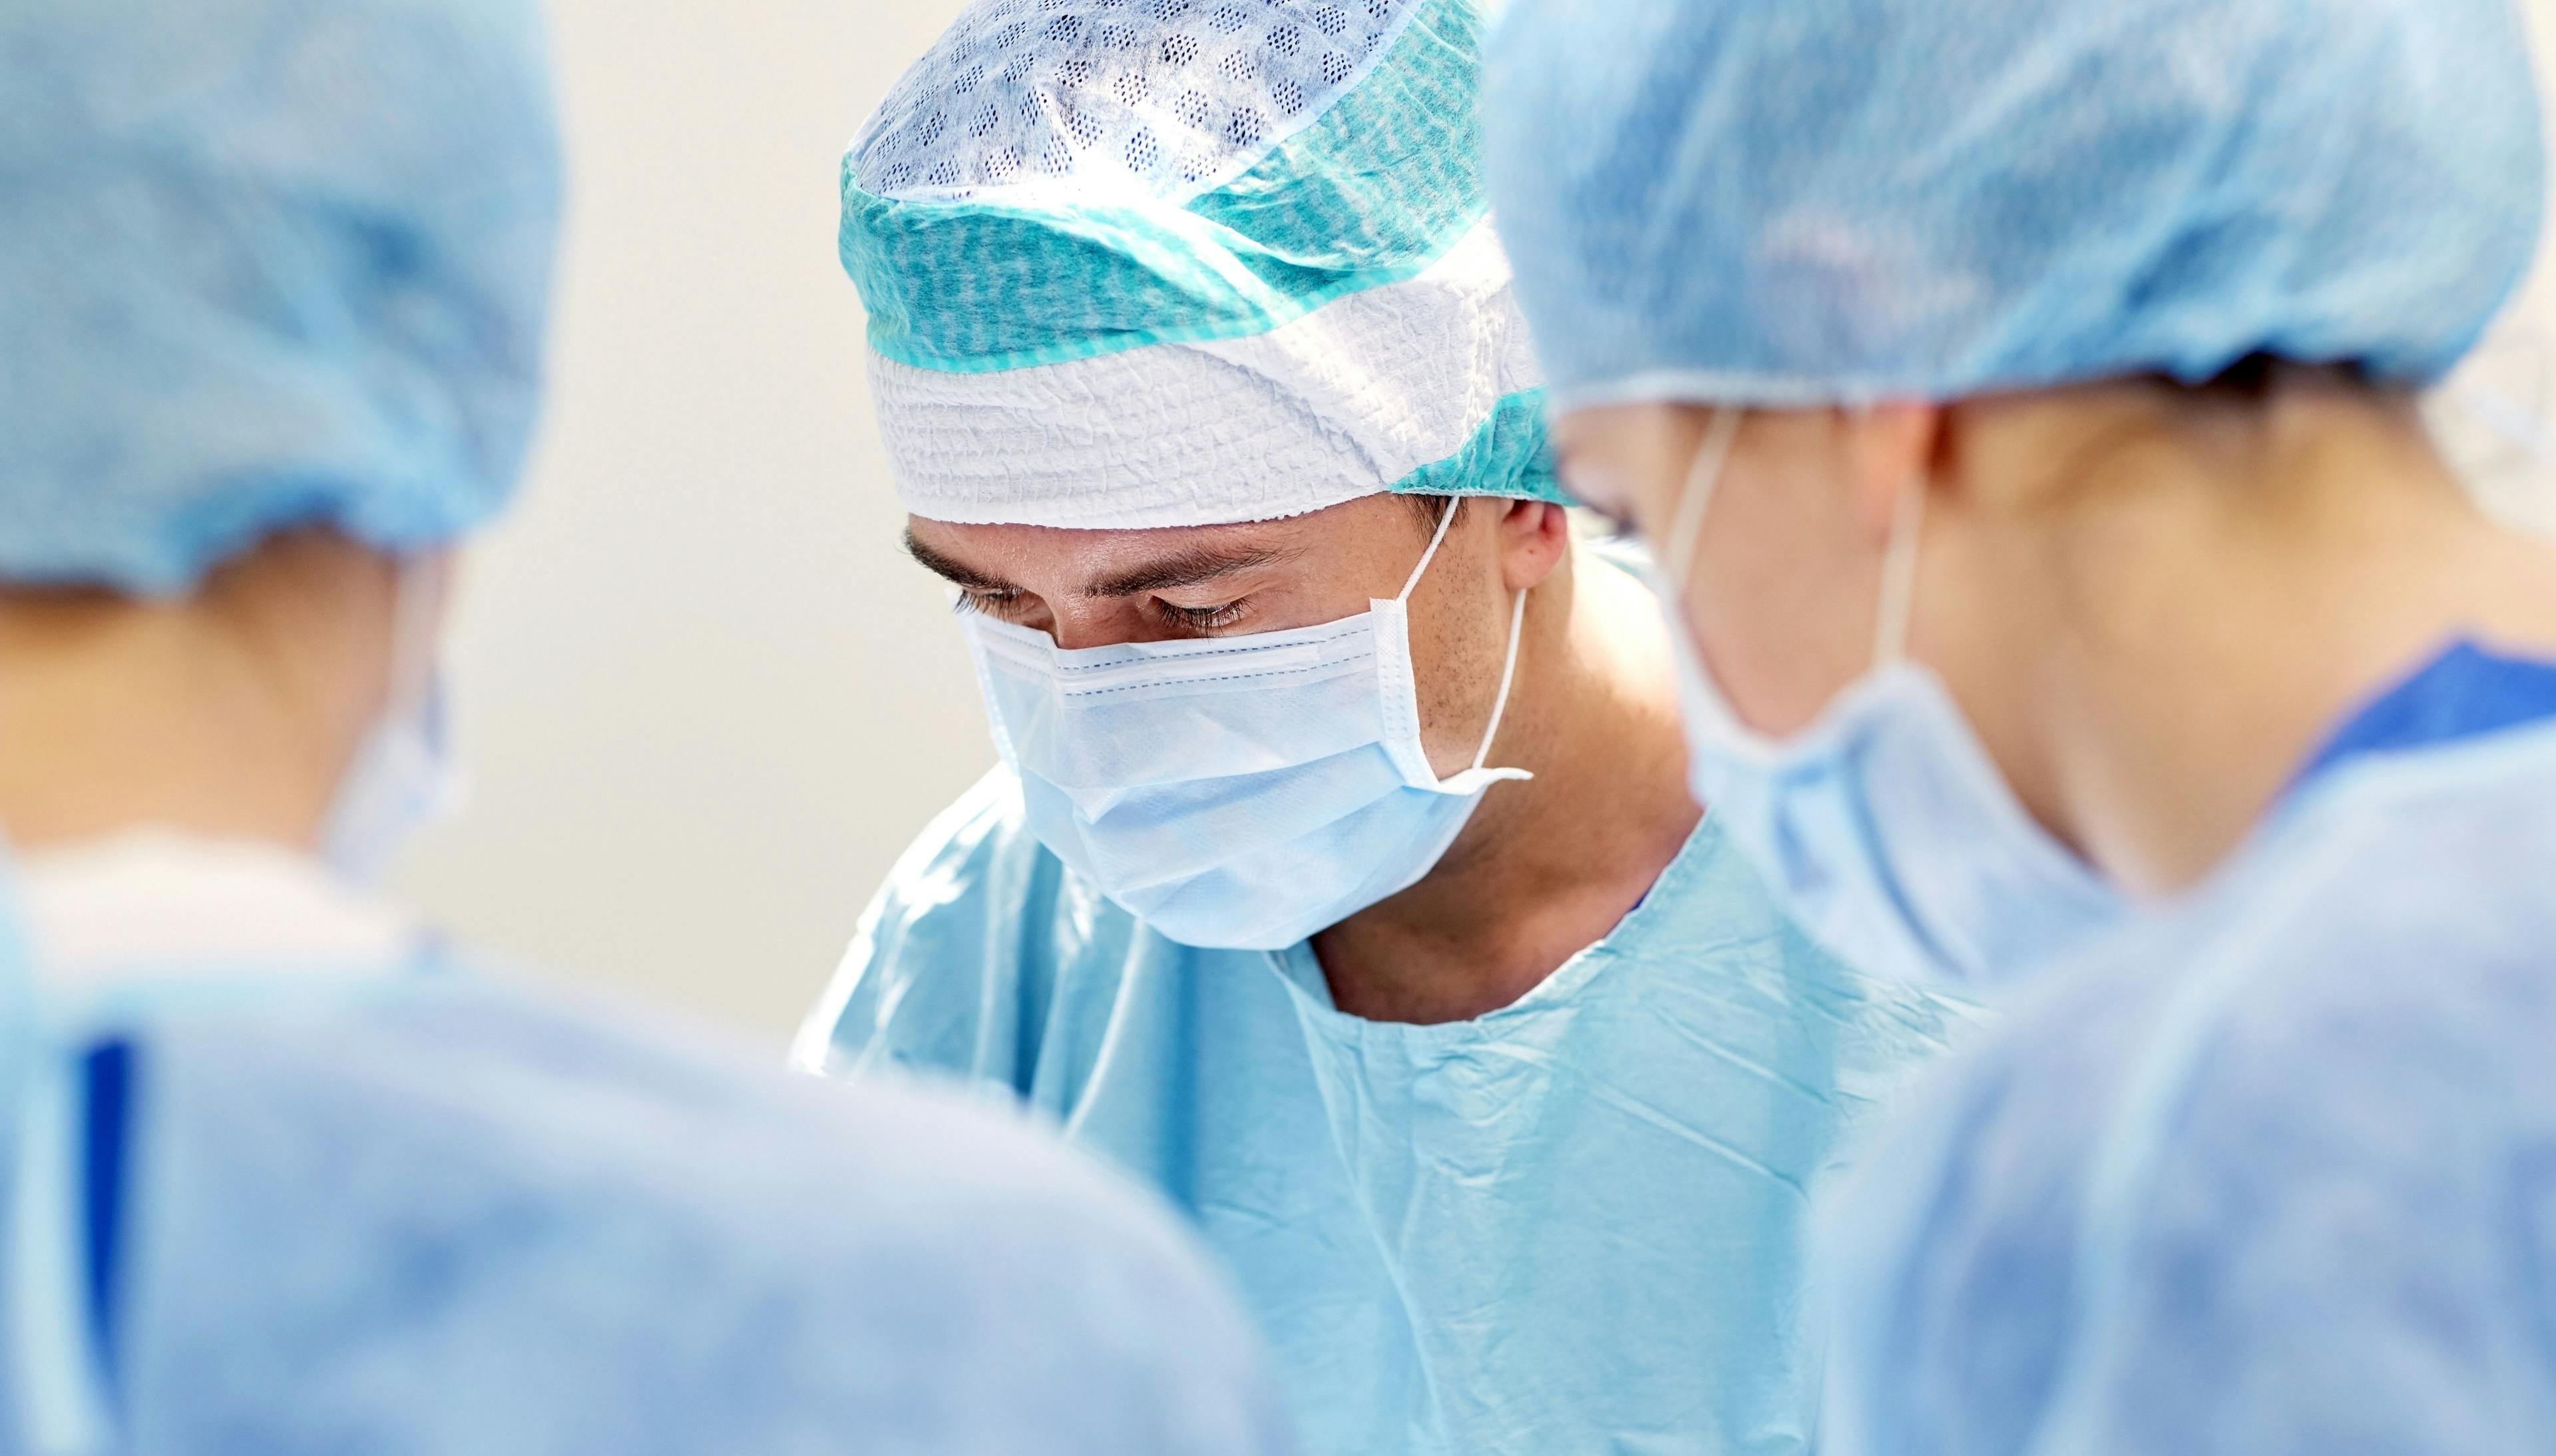 Gender-affirming surgeries have risen 'dramatically': Study